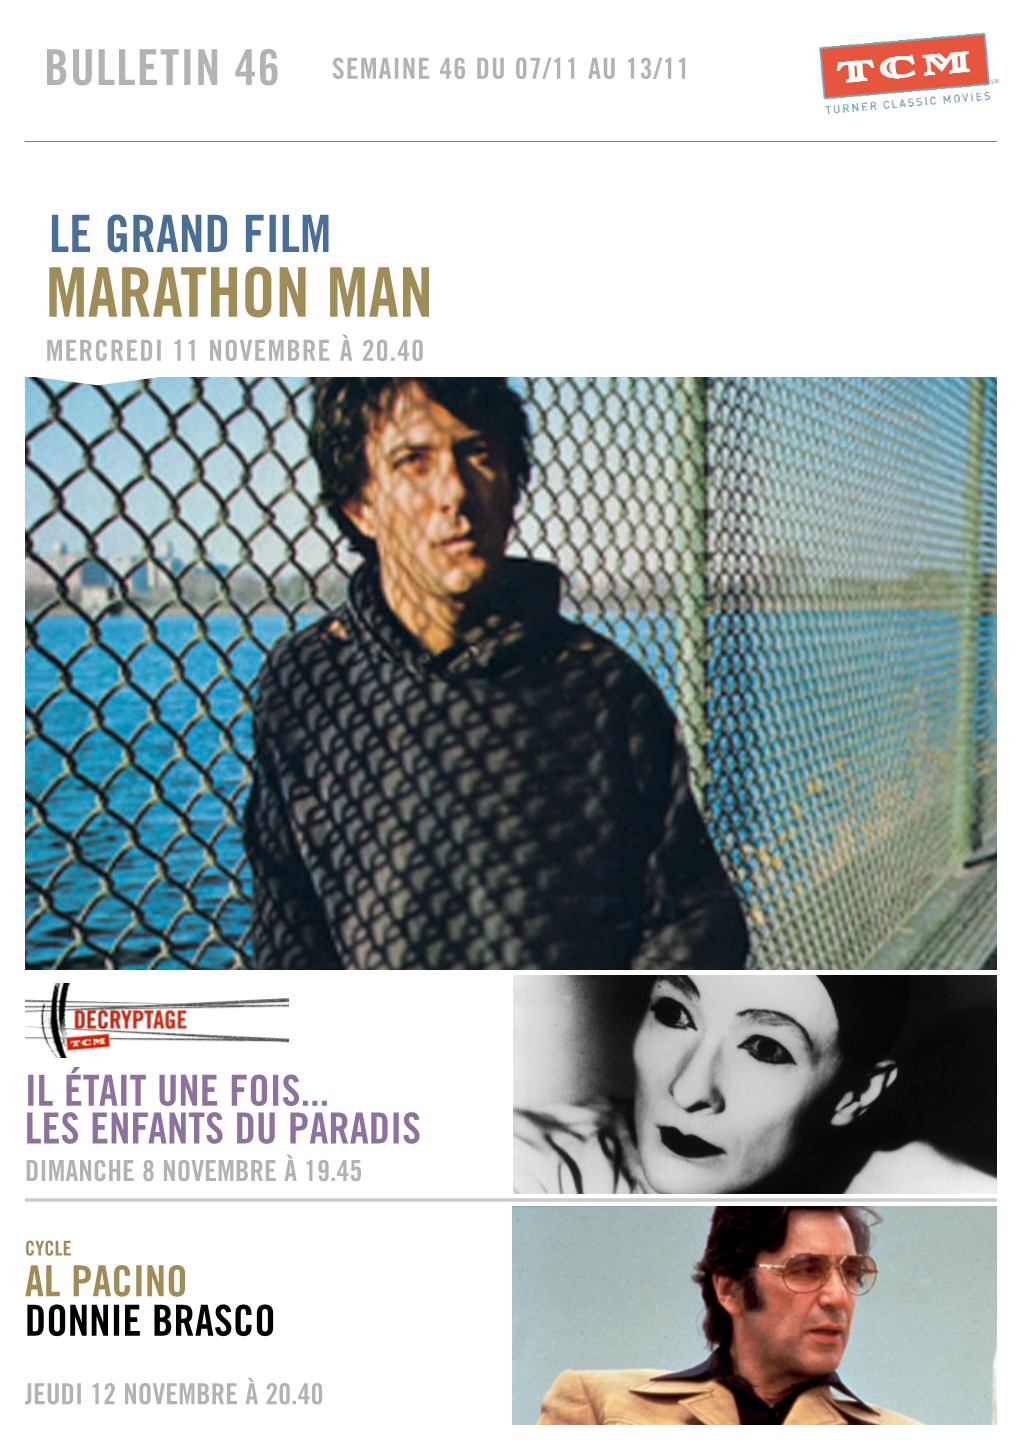 Le Grand Film Marathon Man Mercredi 11 Novembre À 20.40